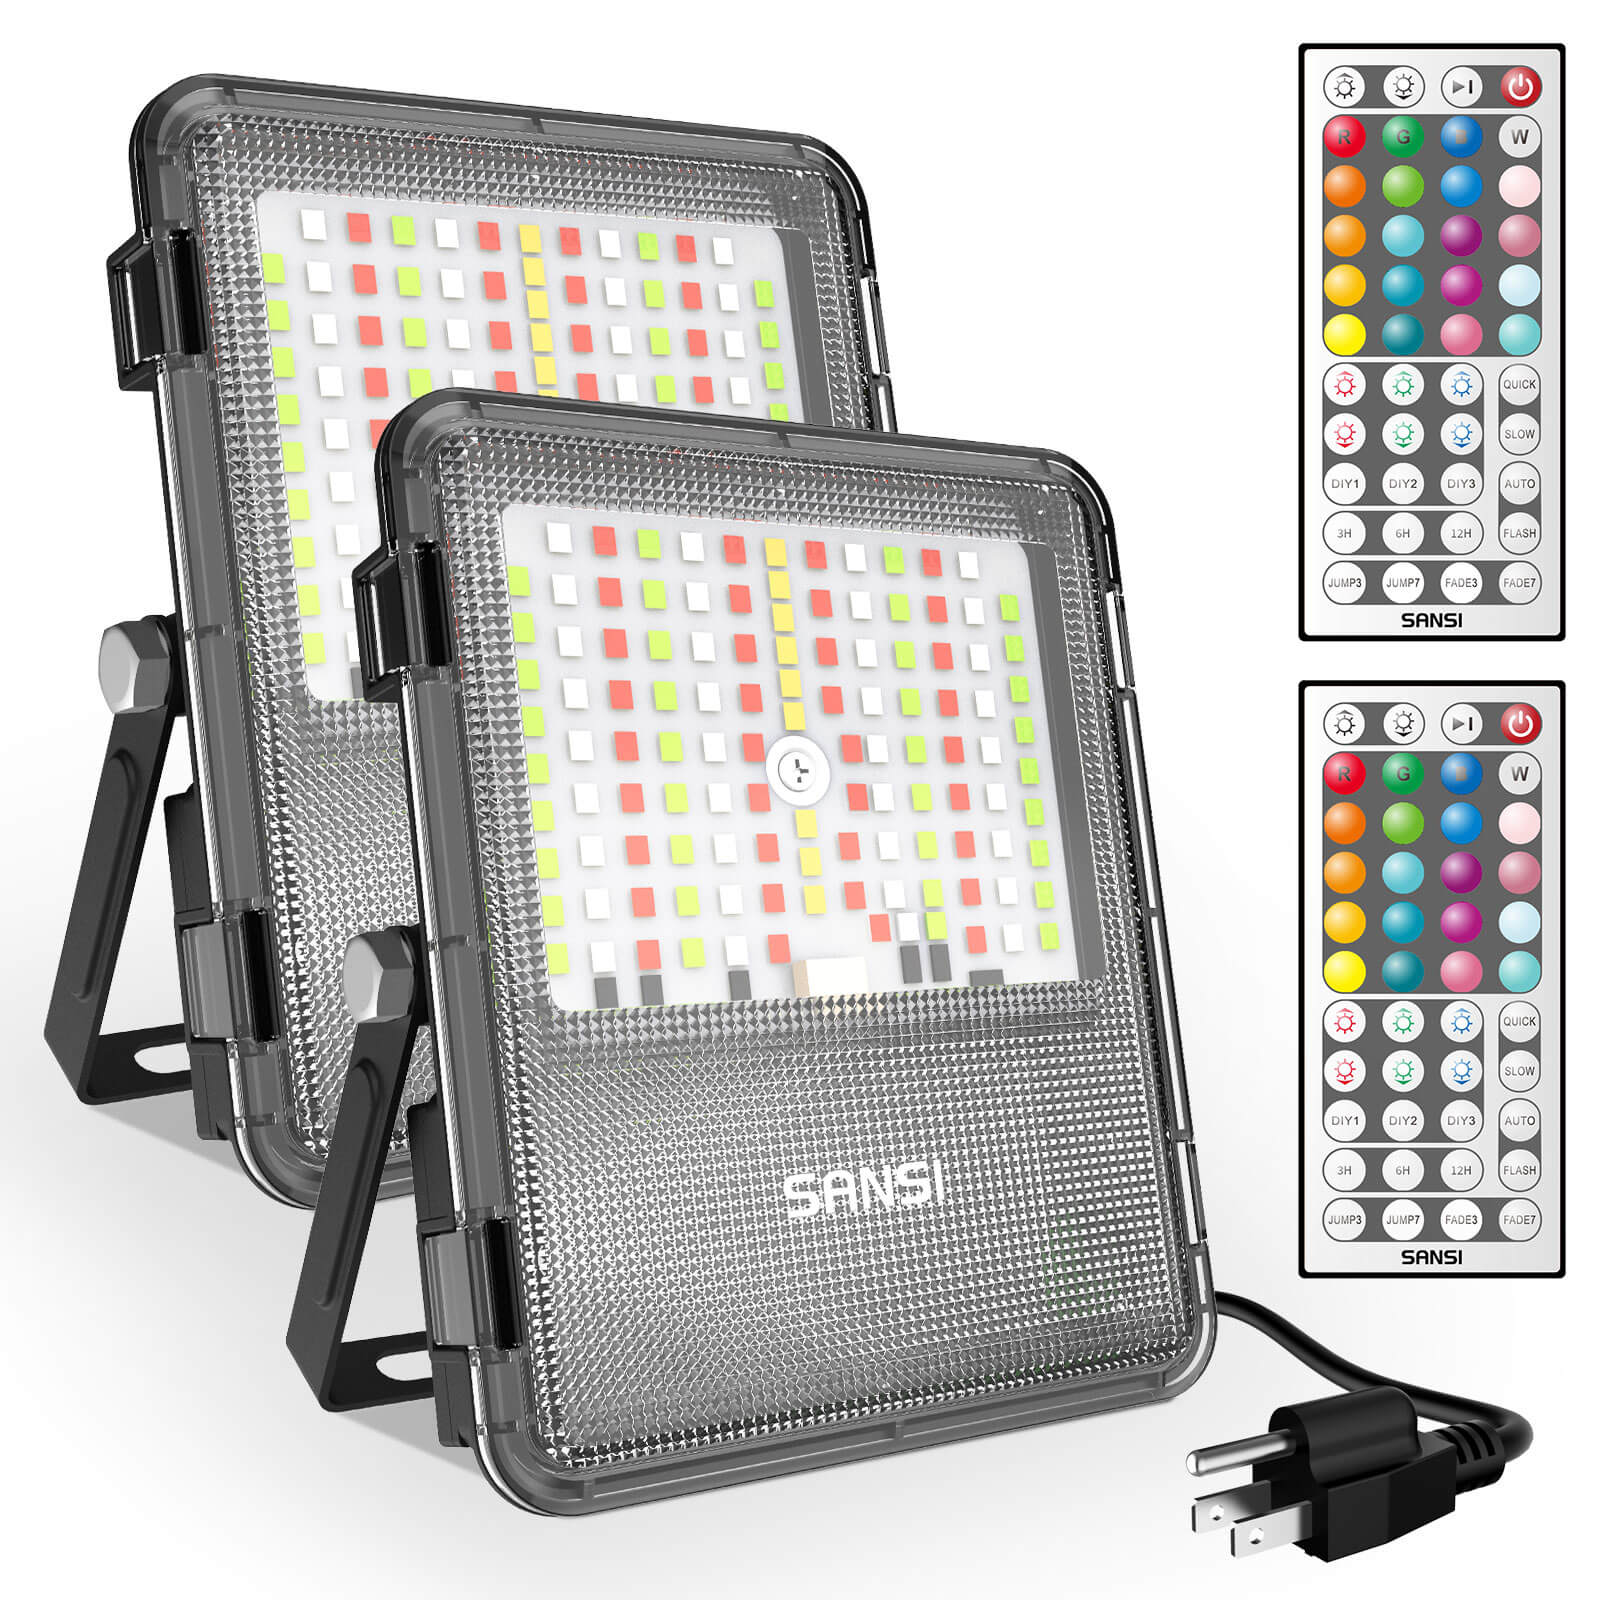 SANSI 160W RGB LED Flood Light (US ONLY)